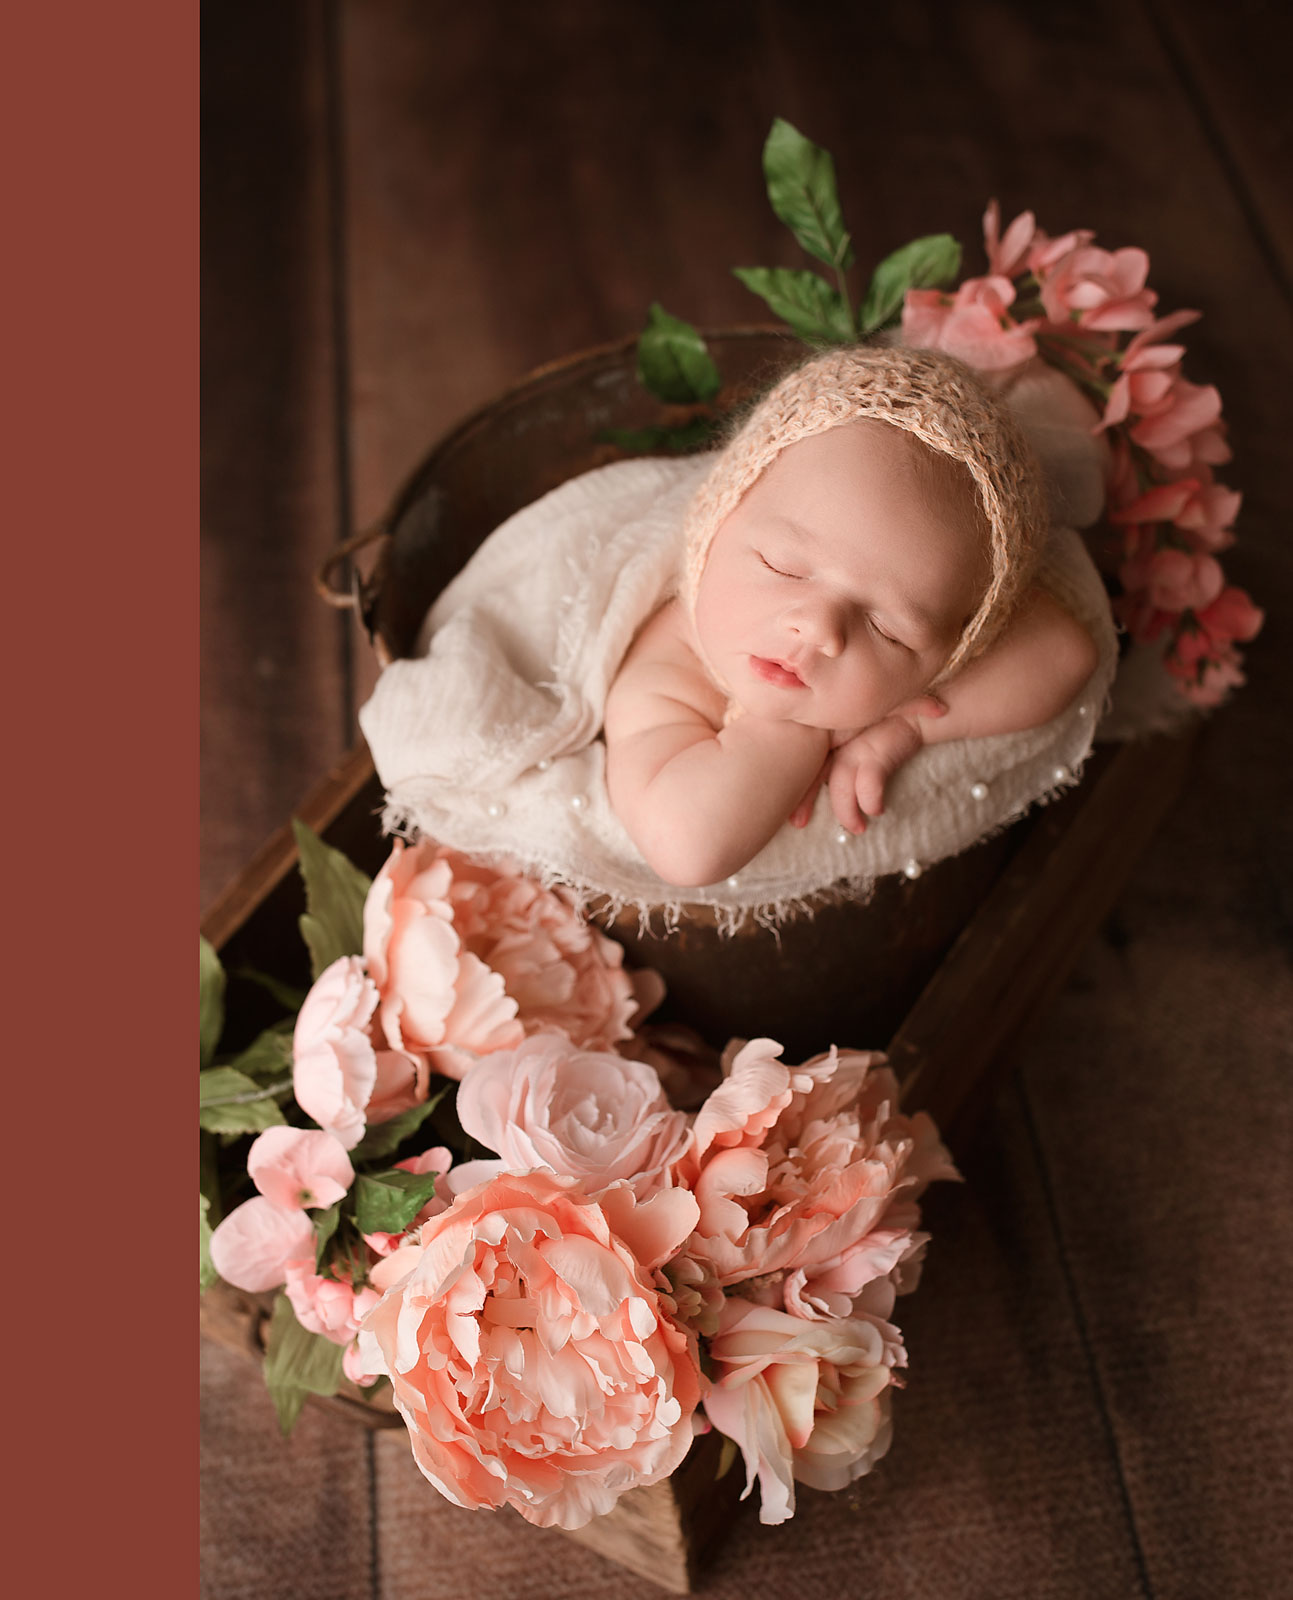 newborn photo shoot hunterdon county nj, baby girl asleep in rustic bucket surrounded by flowers